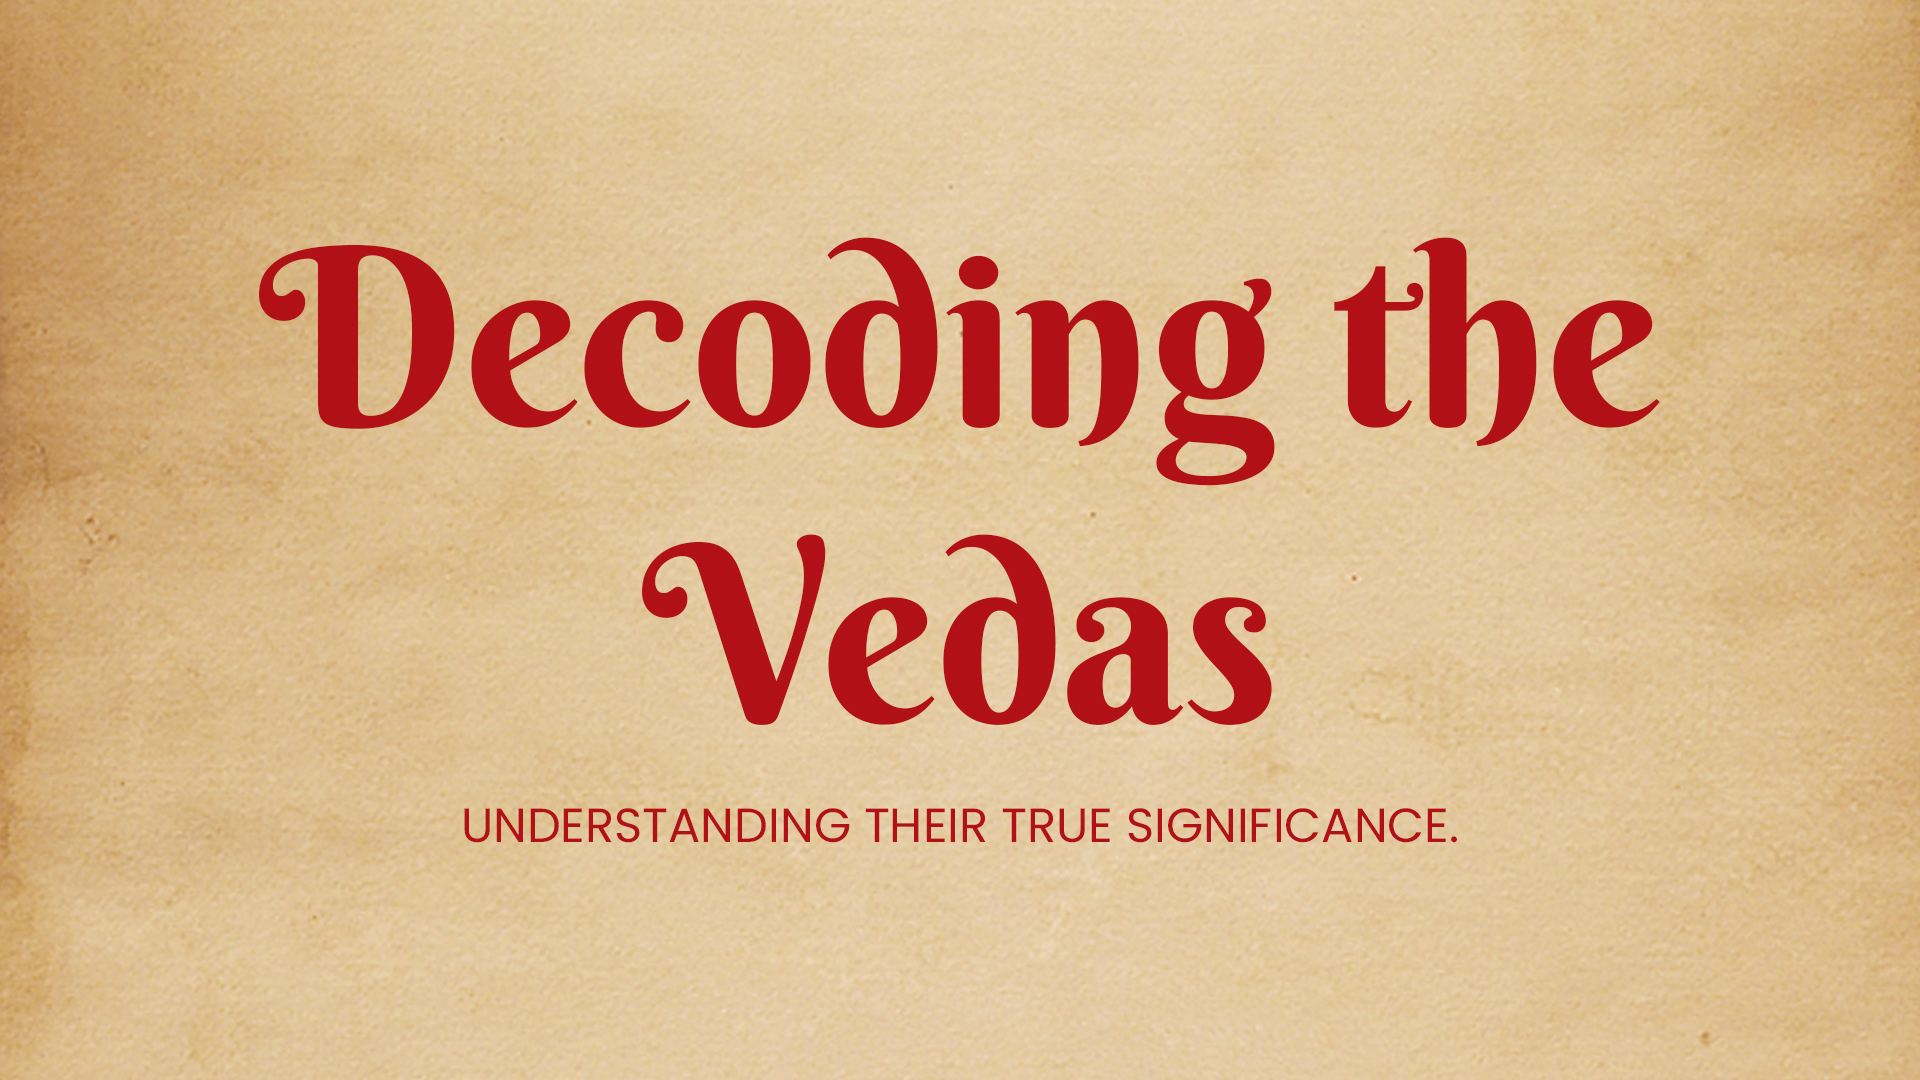 Decoding the vedas